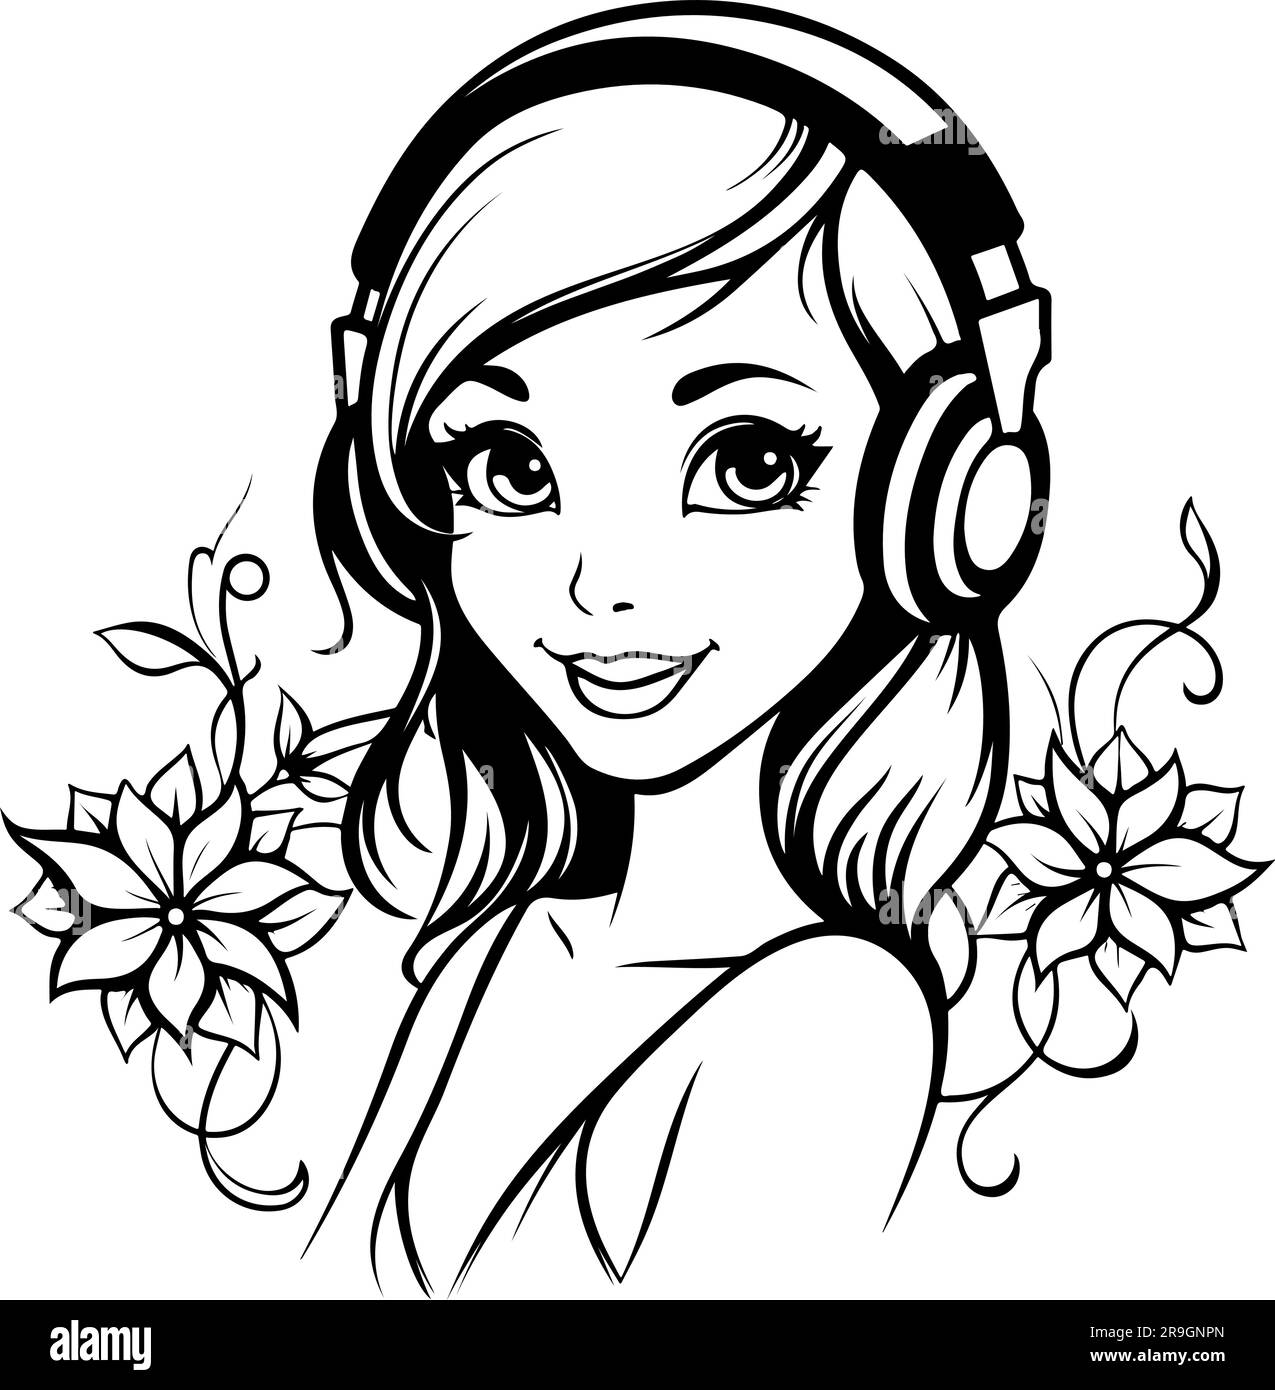 vector art of a cute girl wearing headphones listening to music Stock Vector